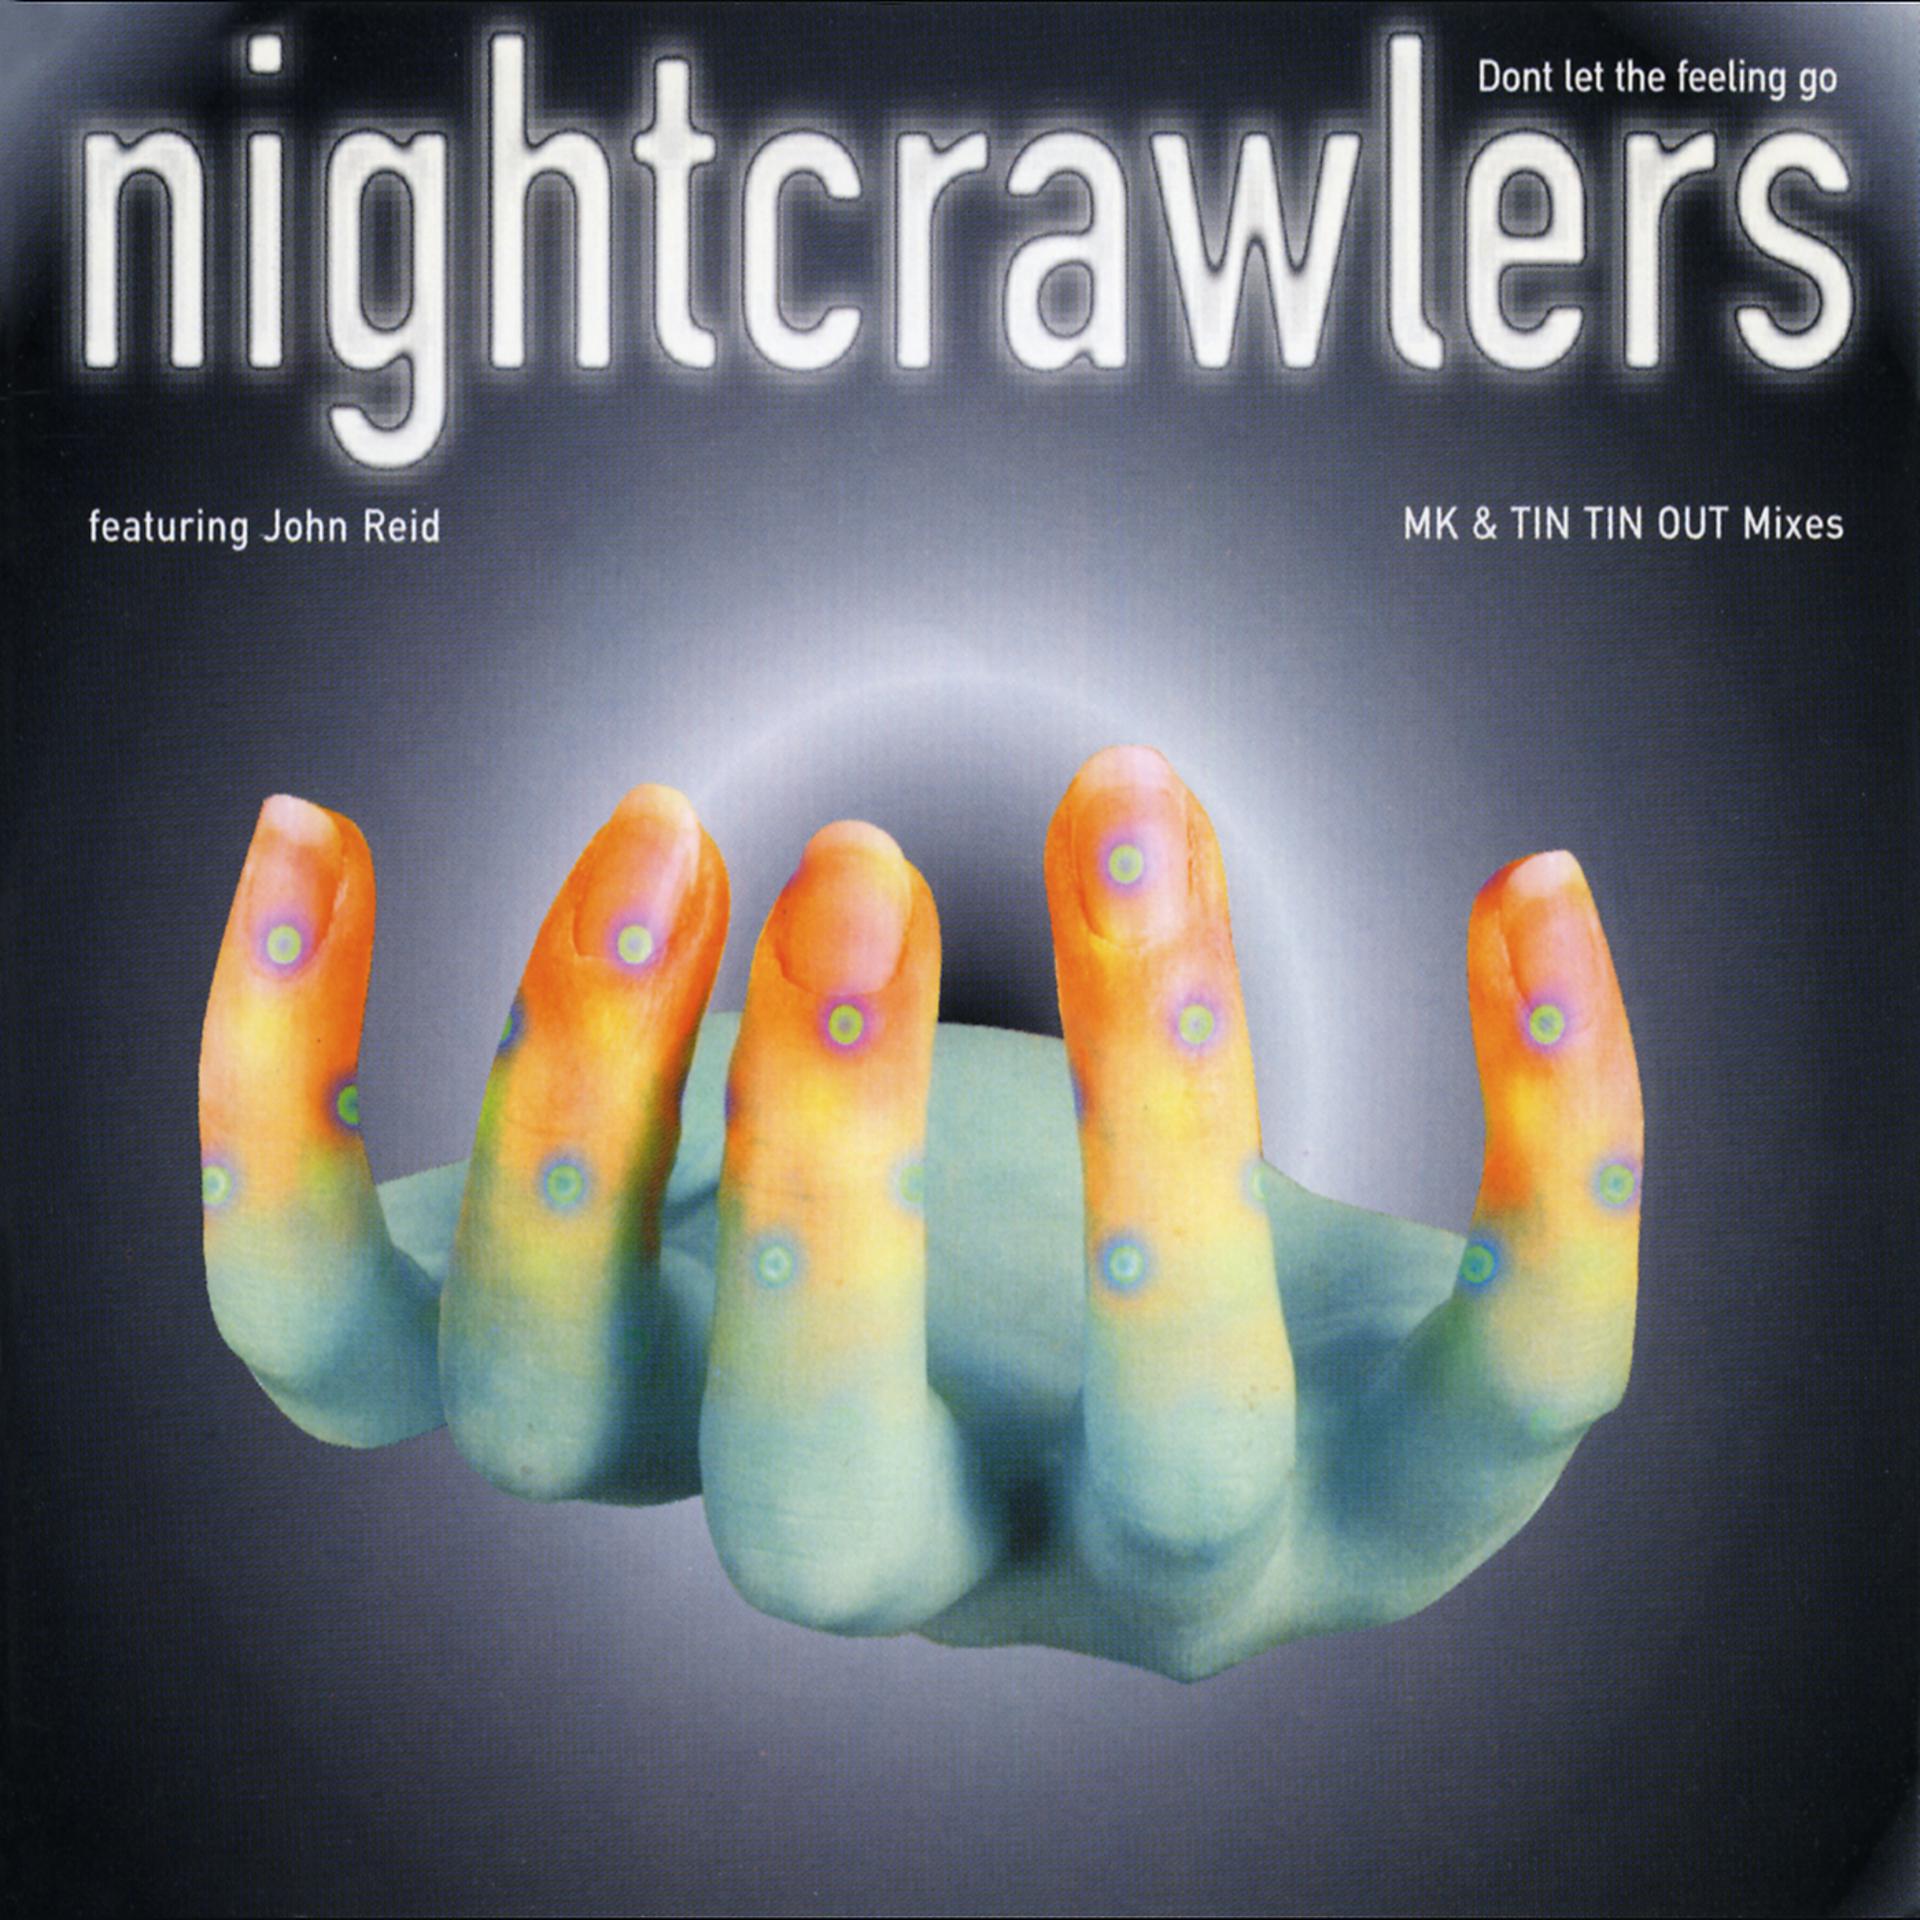 Feeling go песня. John Reid Nightcrawlers. Nightcrawlers группа. Don't Let the feeling go Nightcrawlers. John Reid (Music Manager).